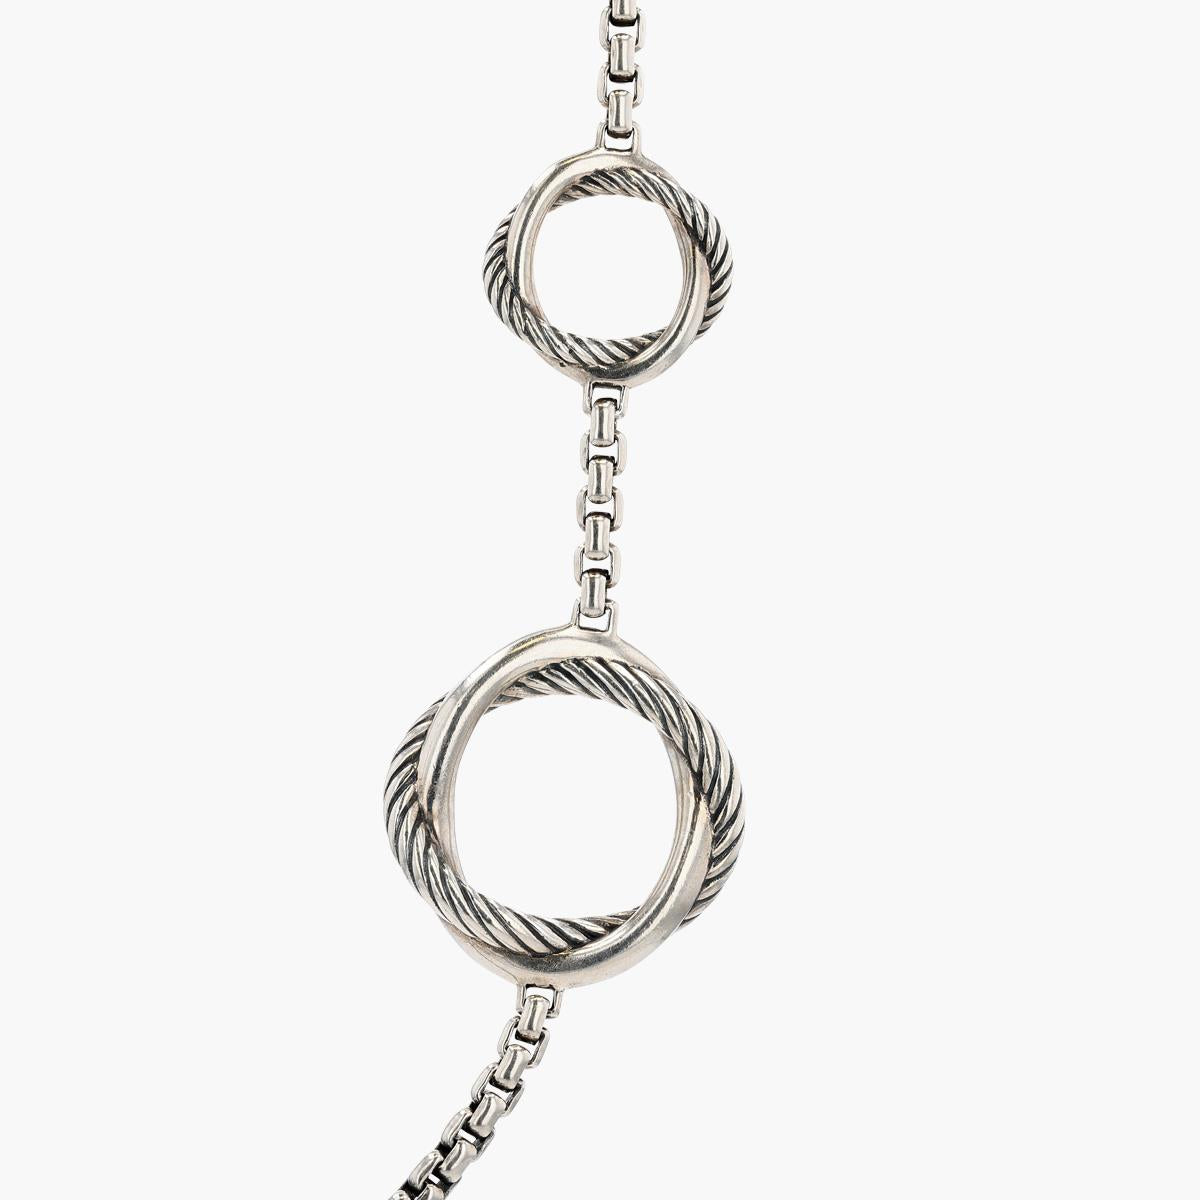 Vintage David Yurman Infinity Necklace